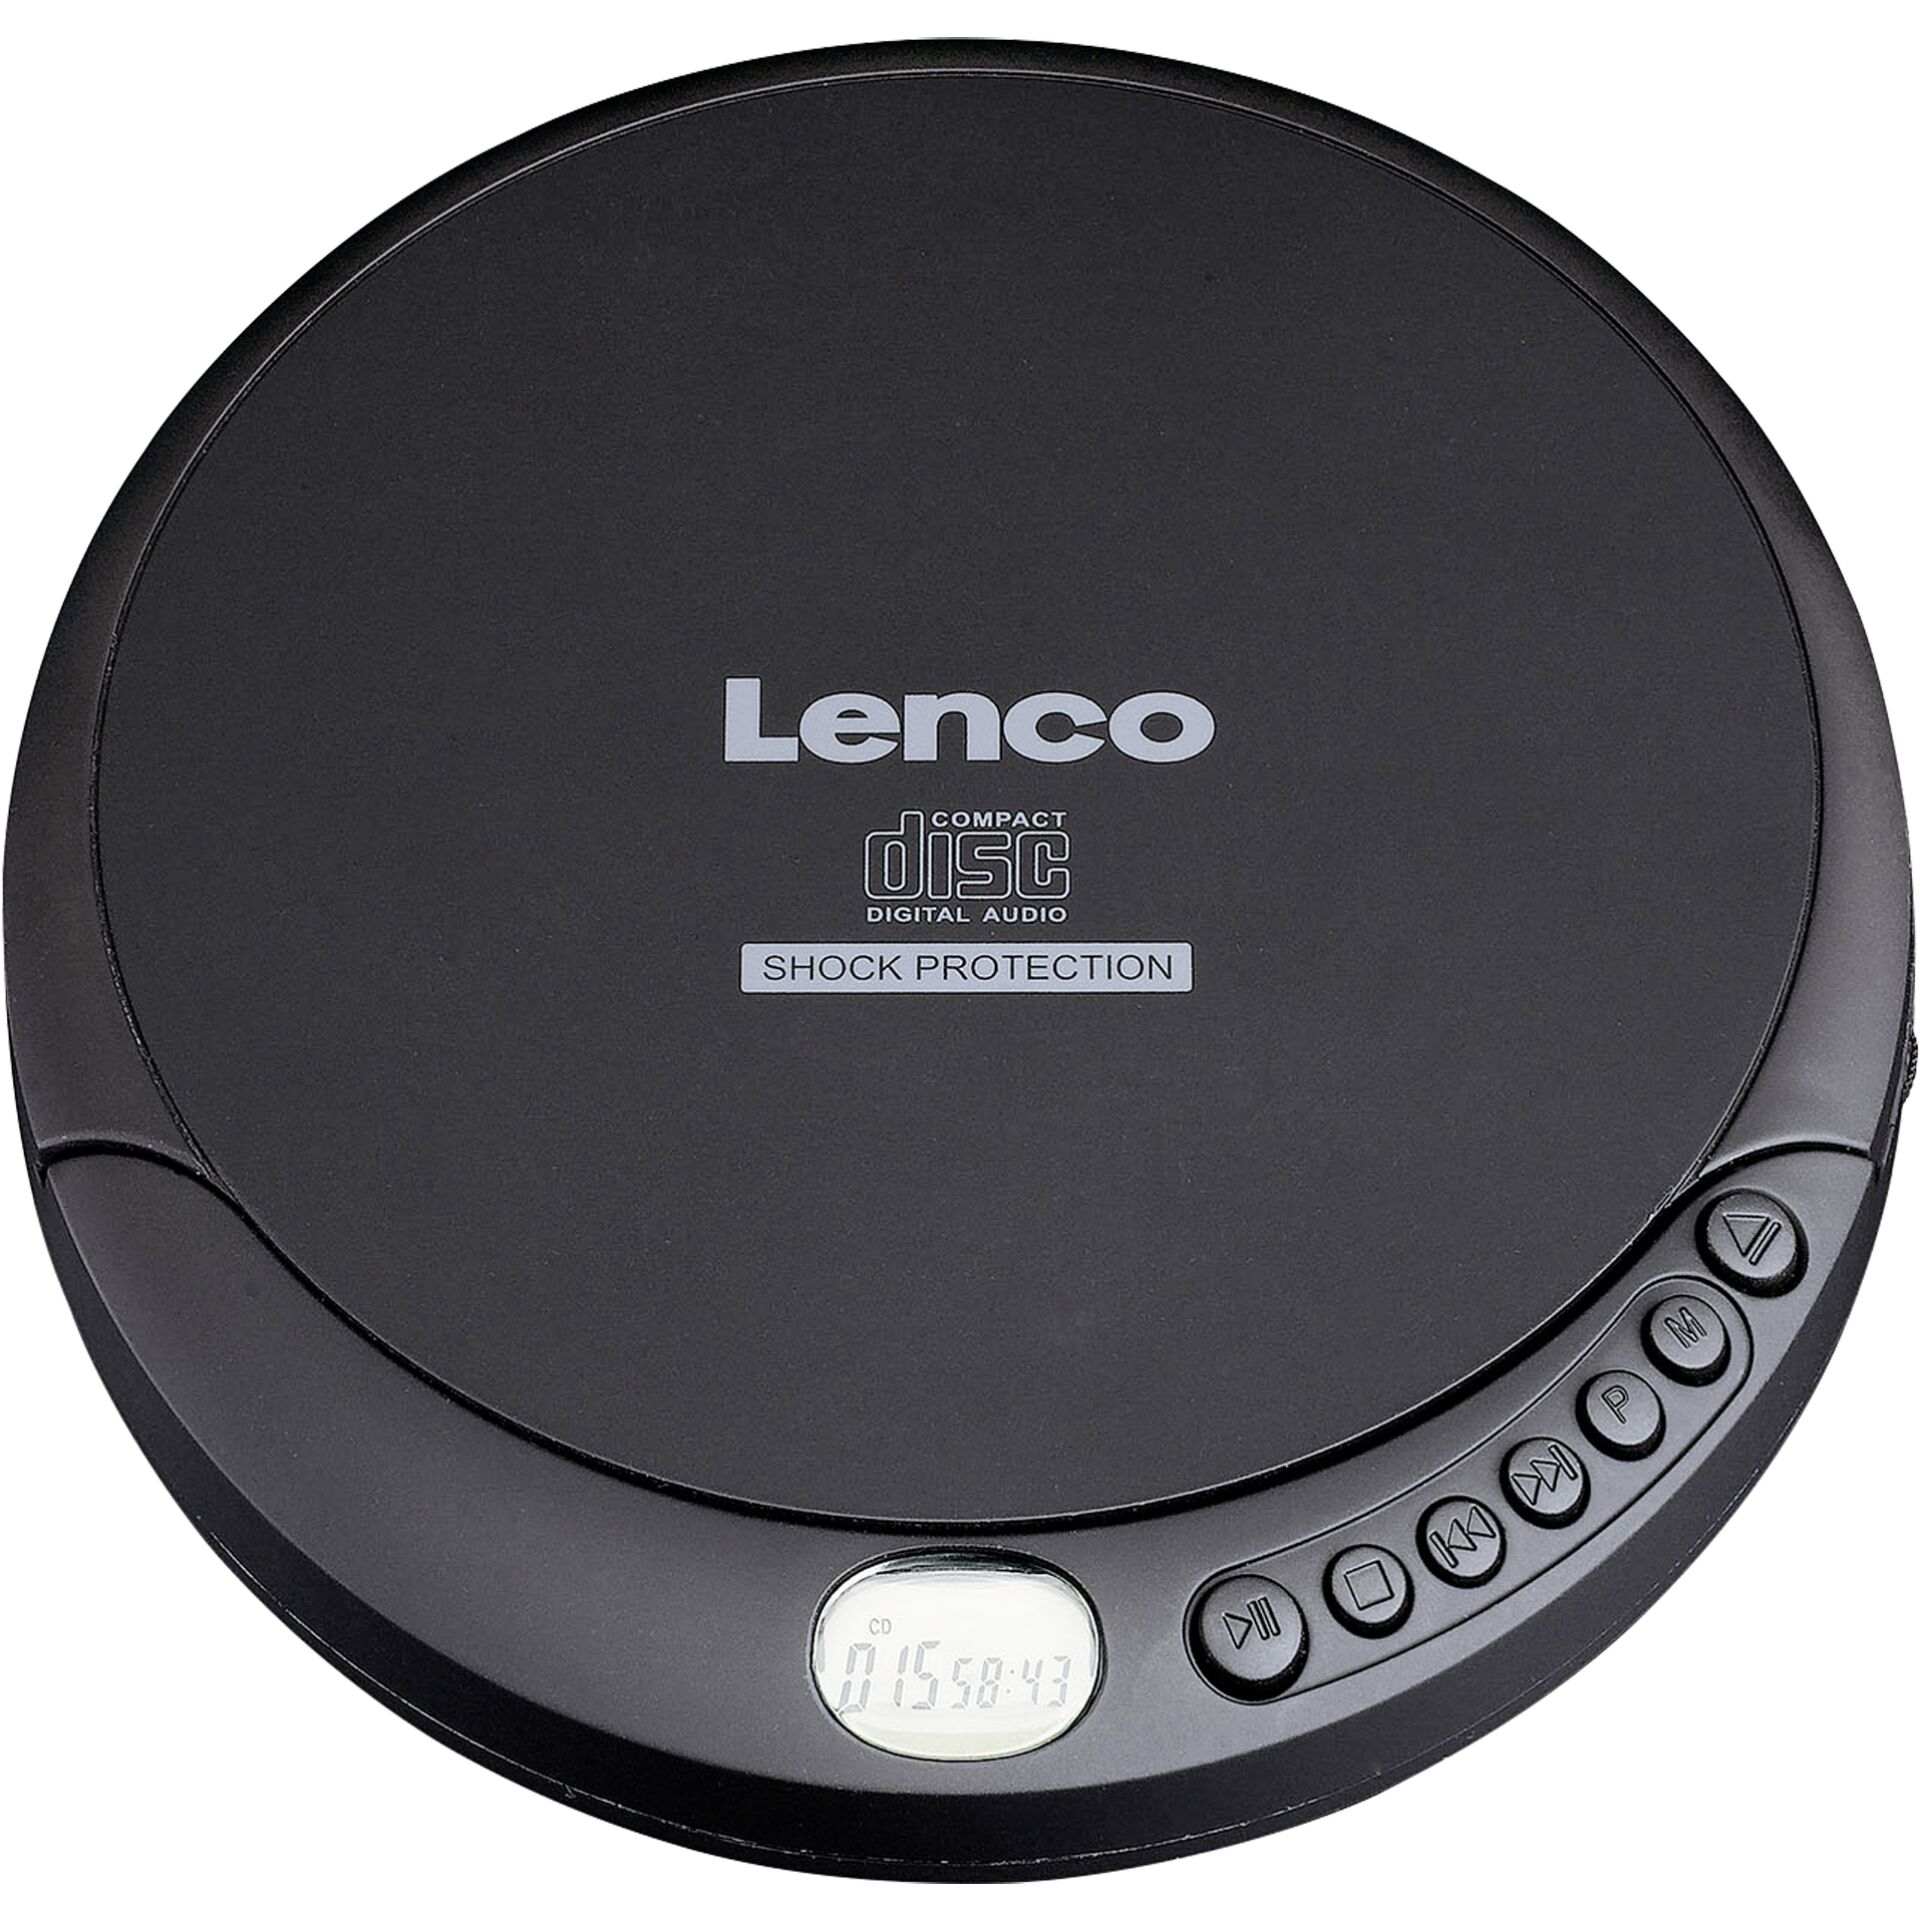 Lenco CD-200 CD-Player Tragbarer CD-Player Schwarz